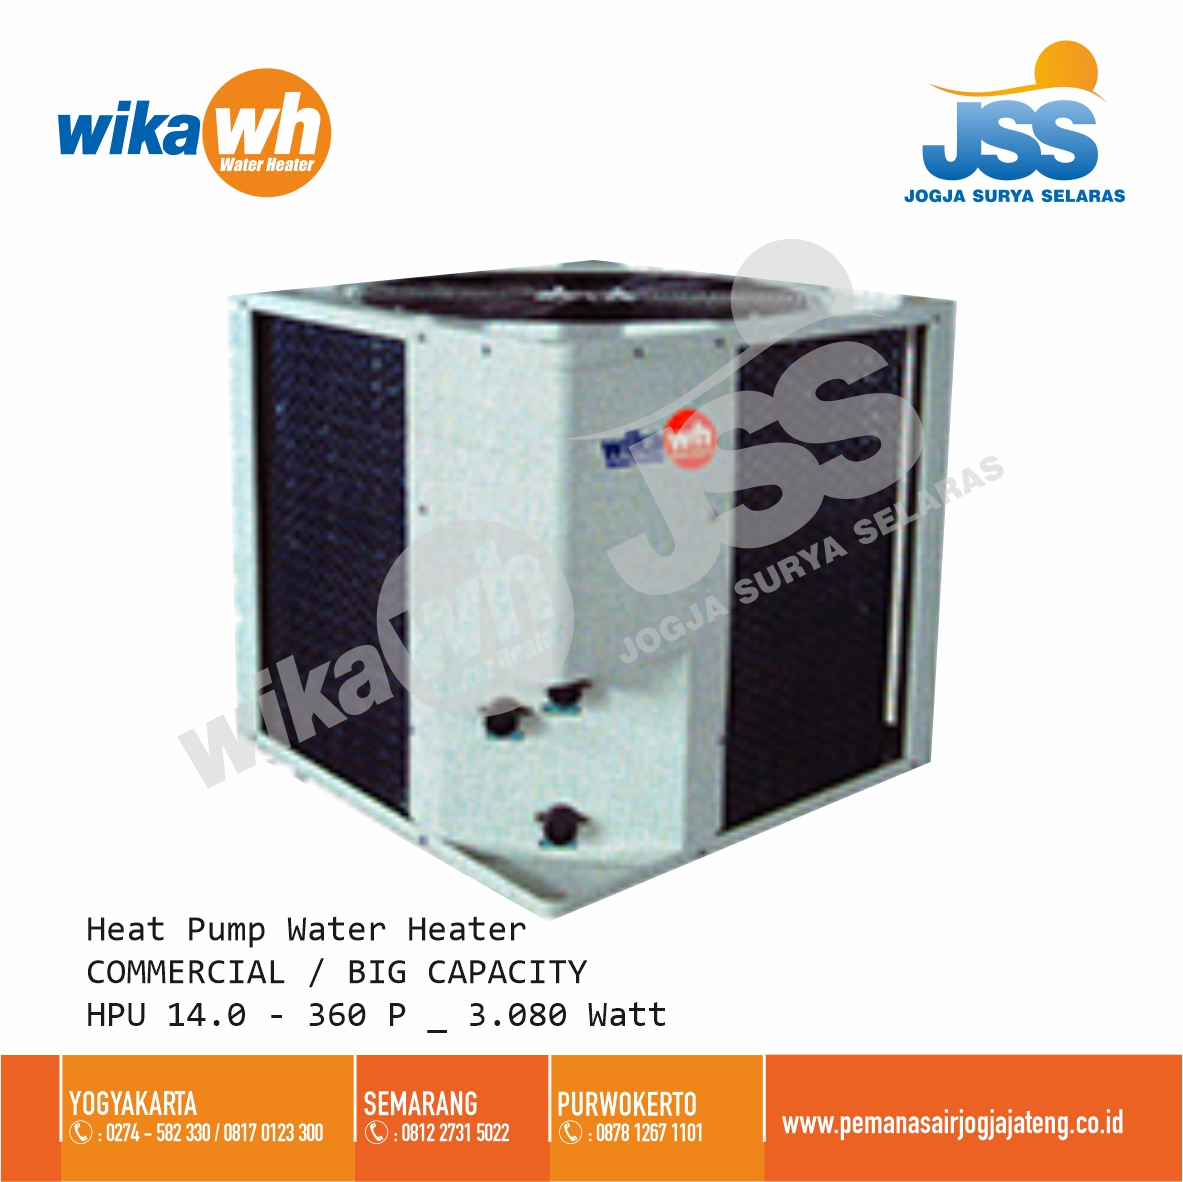 Wika Heat Pump Water Heater Commercial / Big Capacity